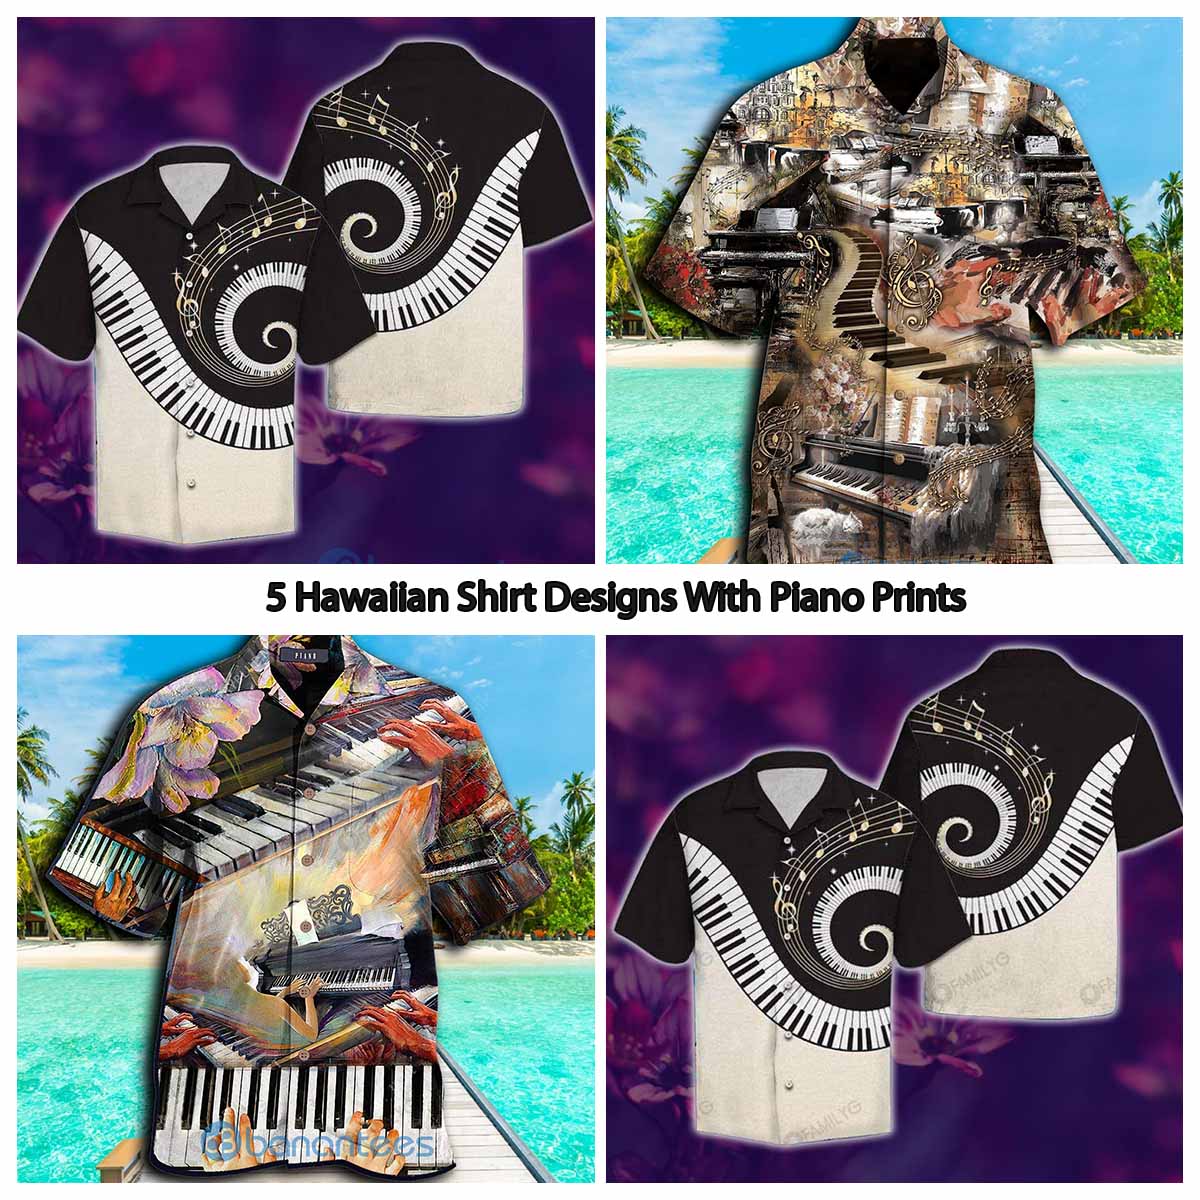 5 Hawaiian Shirt Designs With Piano Prints